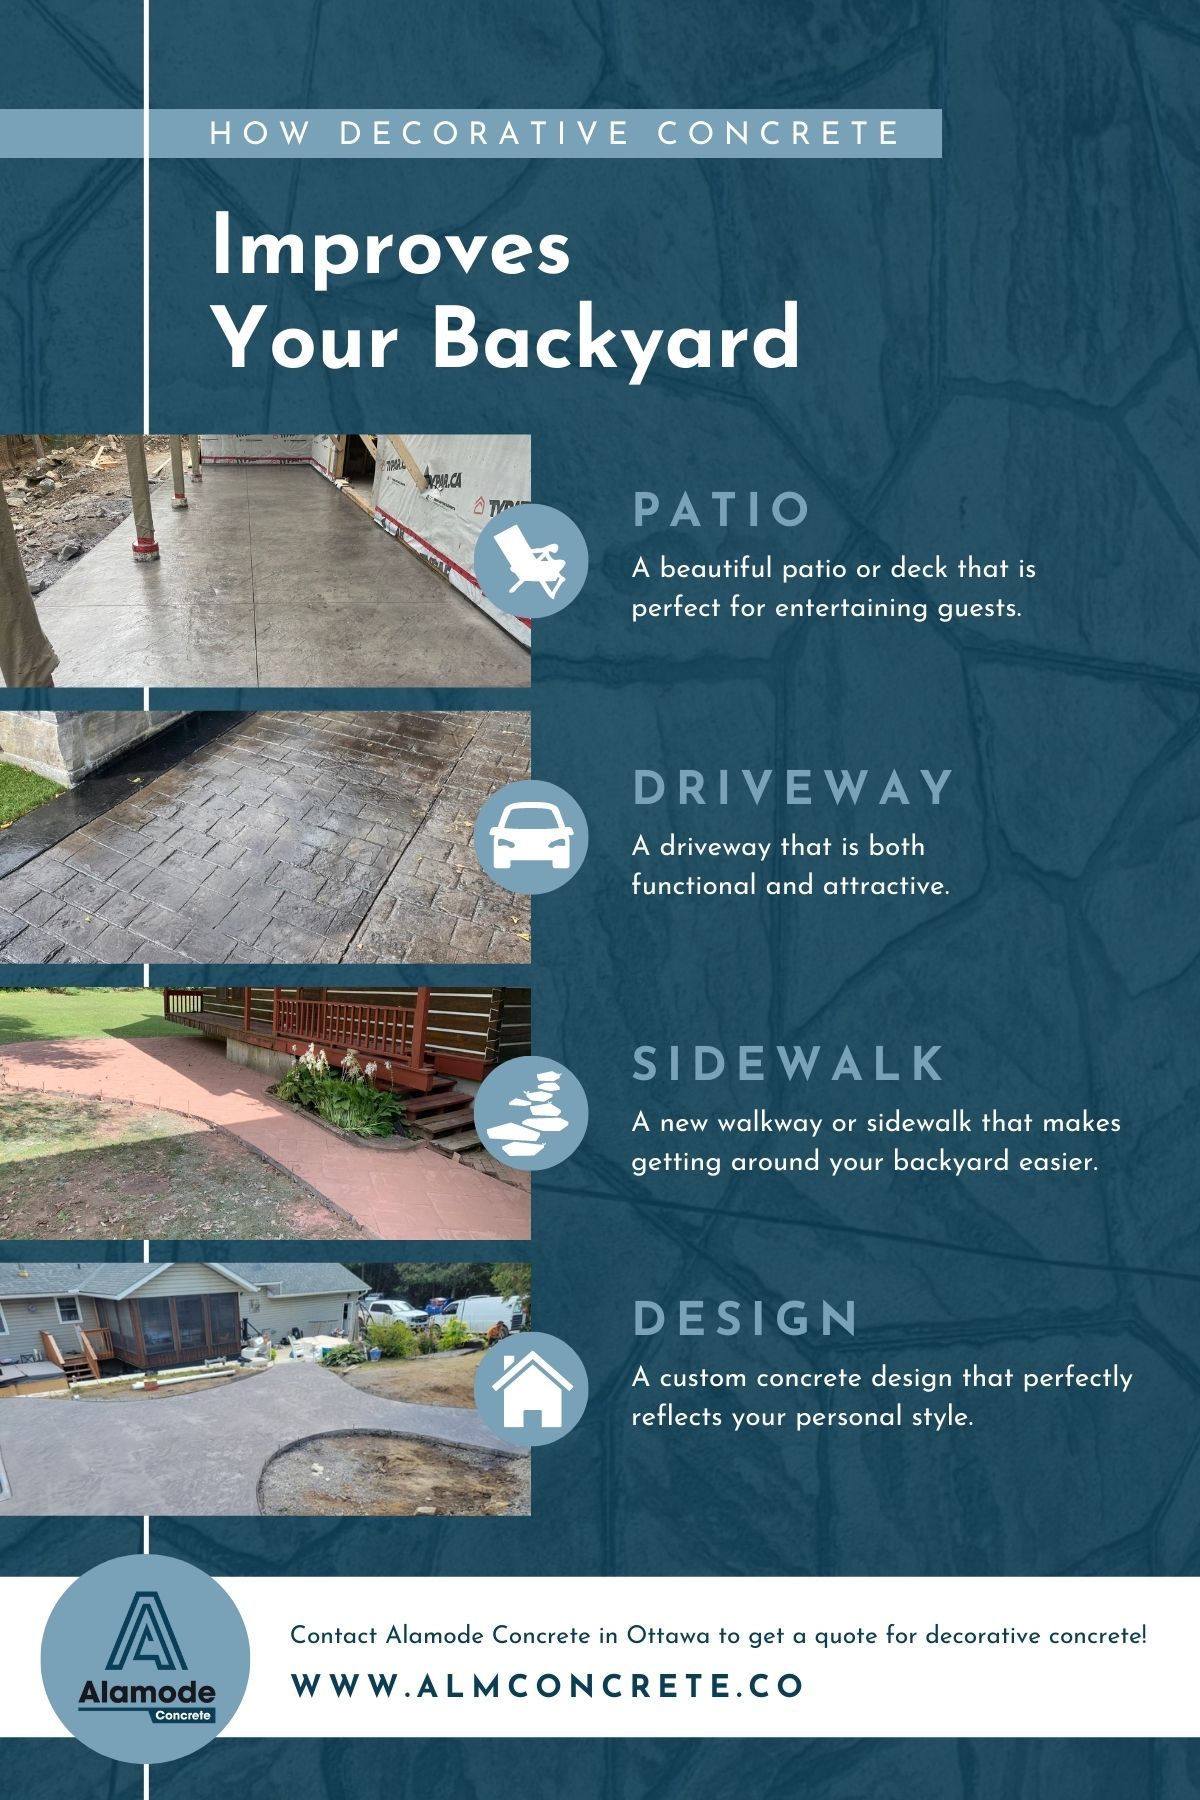 C1493 - Information Design Infographic - How Decorative Concrete Improves Your Backyard'.jpg